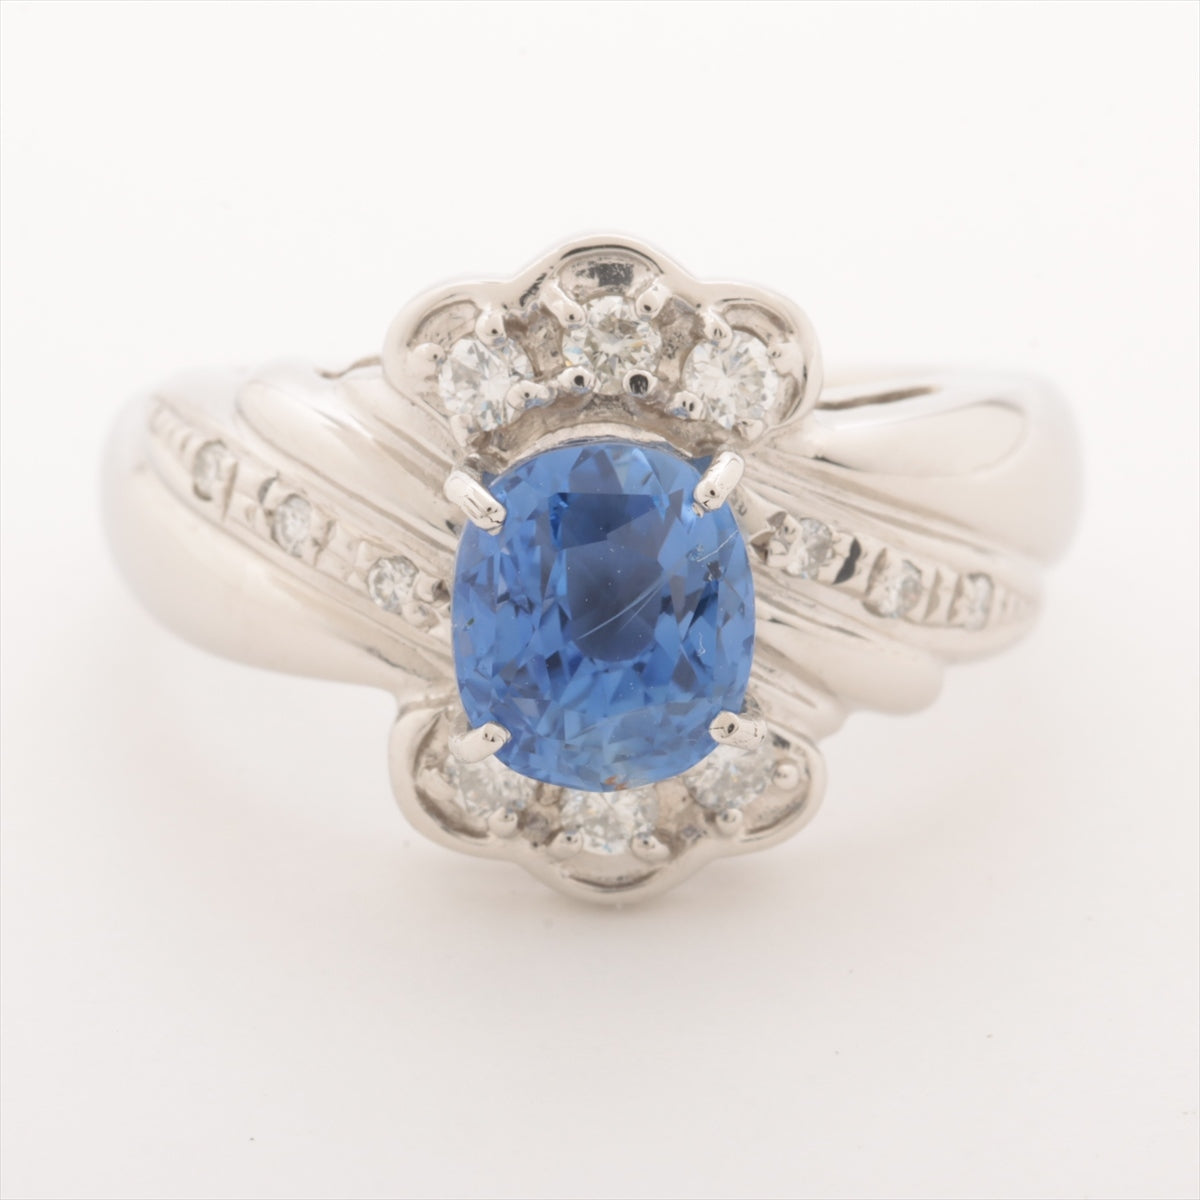 Sapphire diamond rings Pt900 8.9g 2.48 0.22 Untreated cornflower blue